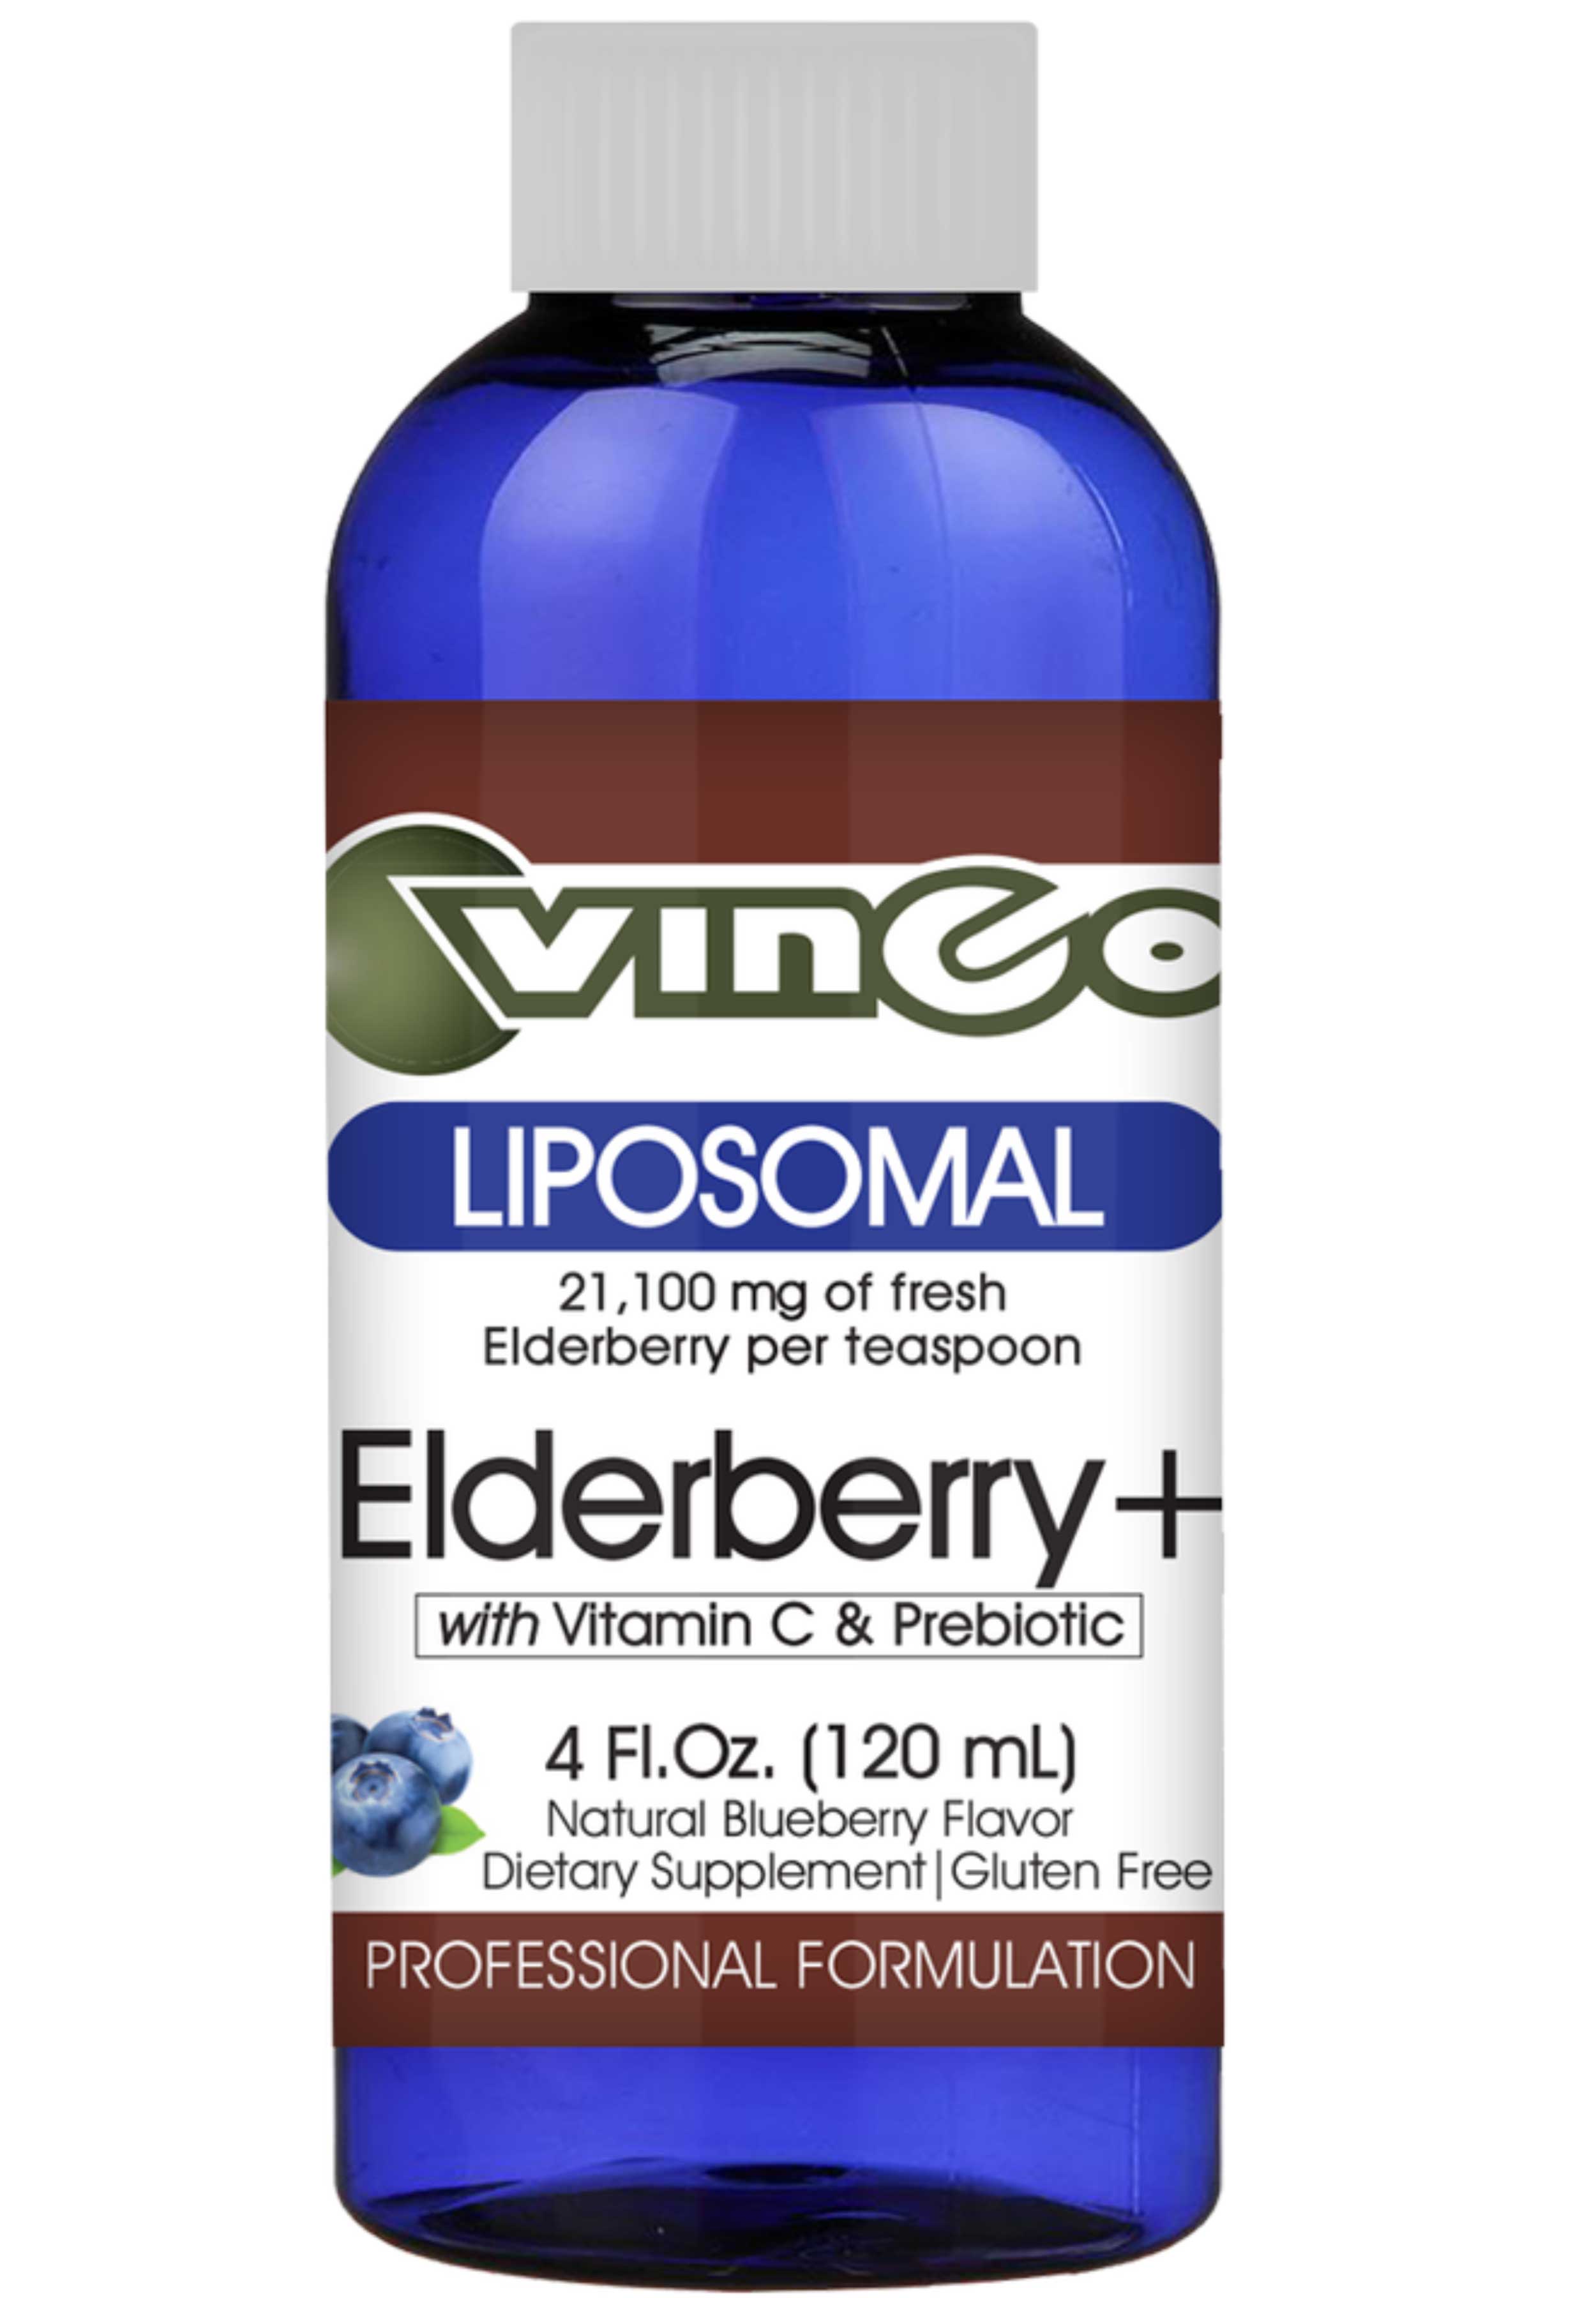 Vinco Elderberry + (Liposomal)